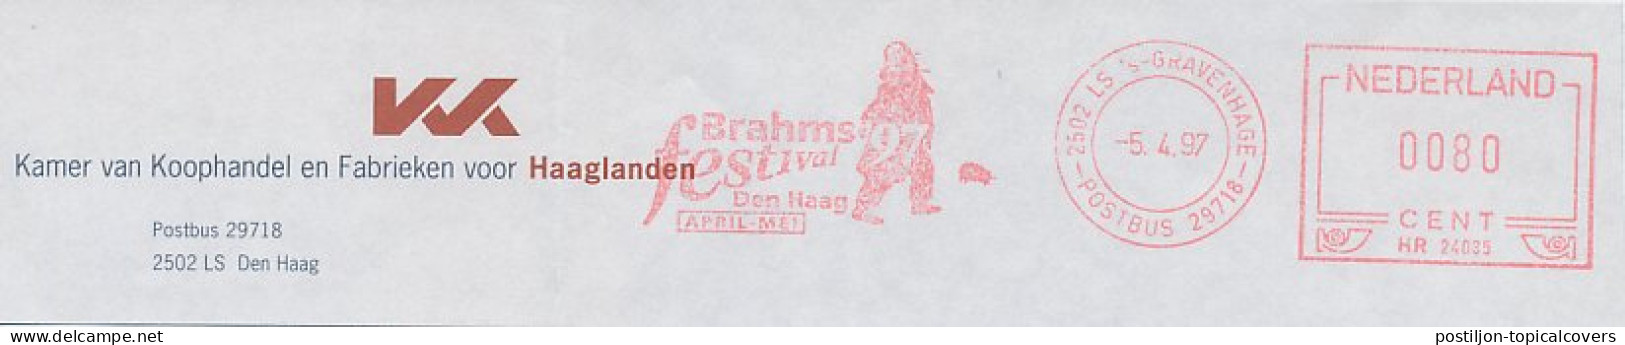 Meter Top Cut Netherlands 1997 Brahms Festival 1997 - Composer - Musique